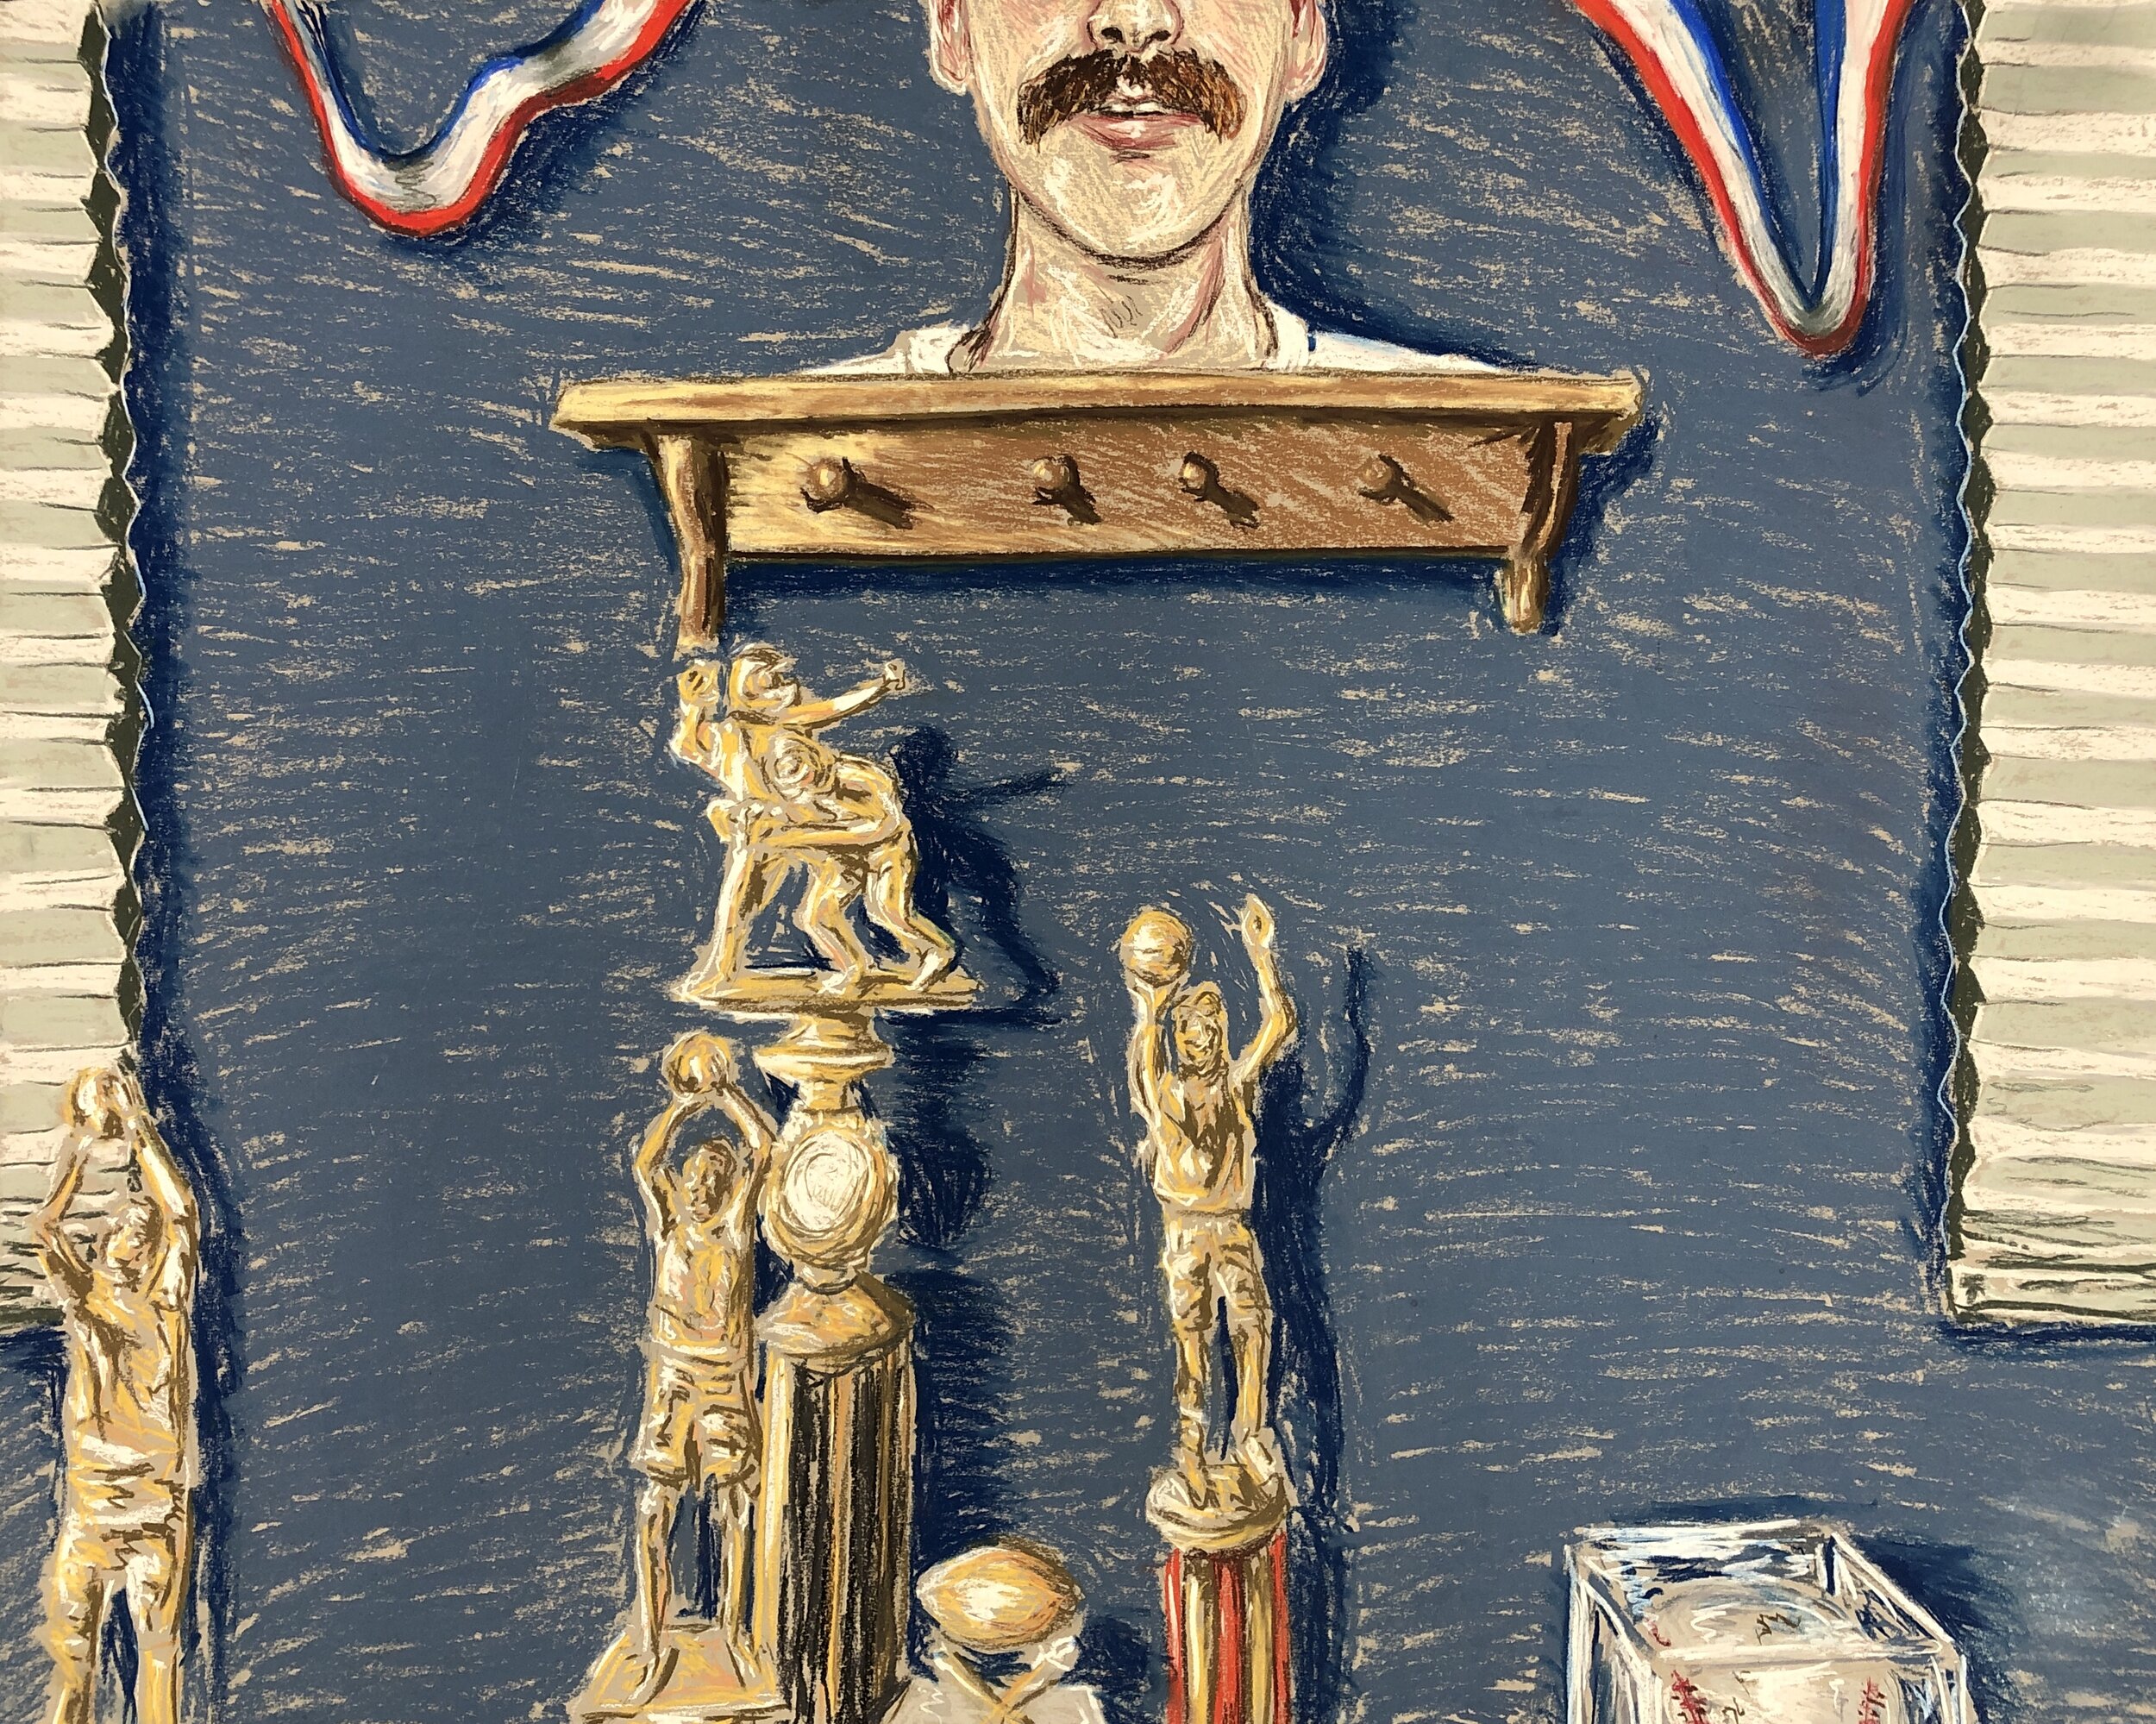   Nicholas Goodhue ,  Trophies (Self-Portrait) , pastel on paper, 32x40 inches, $950 